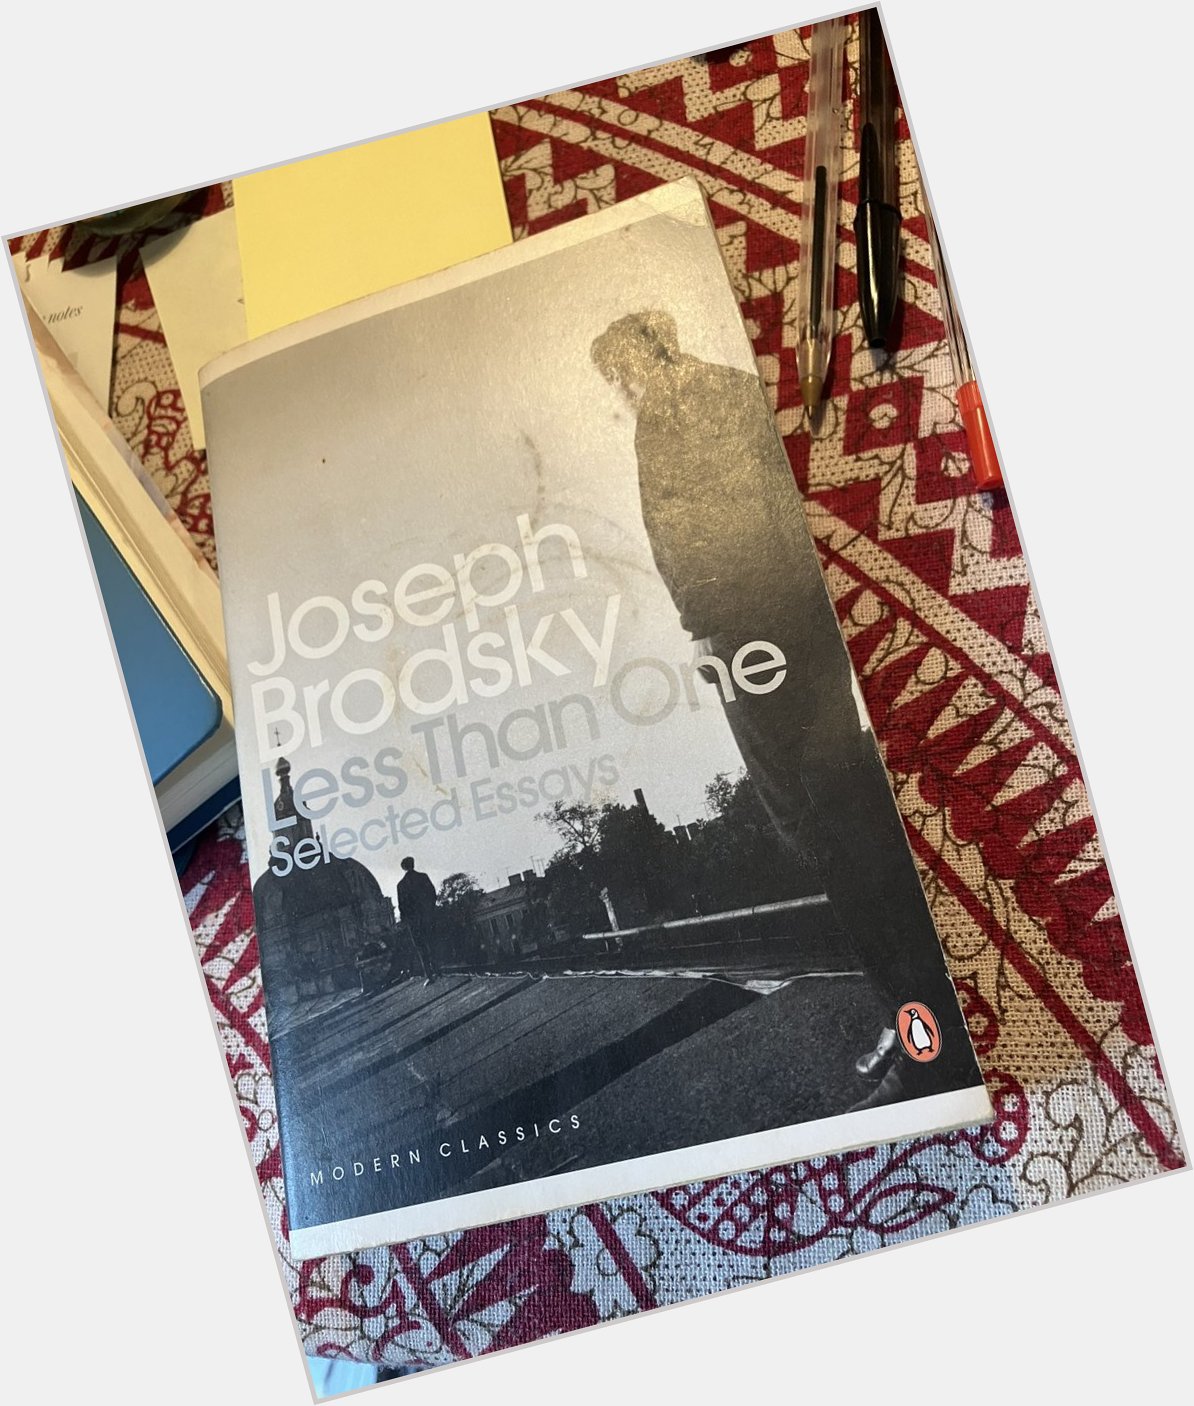 And of course Happy Birthday Joseph Brodsky. 